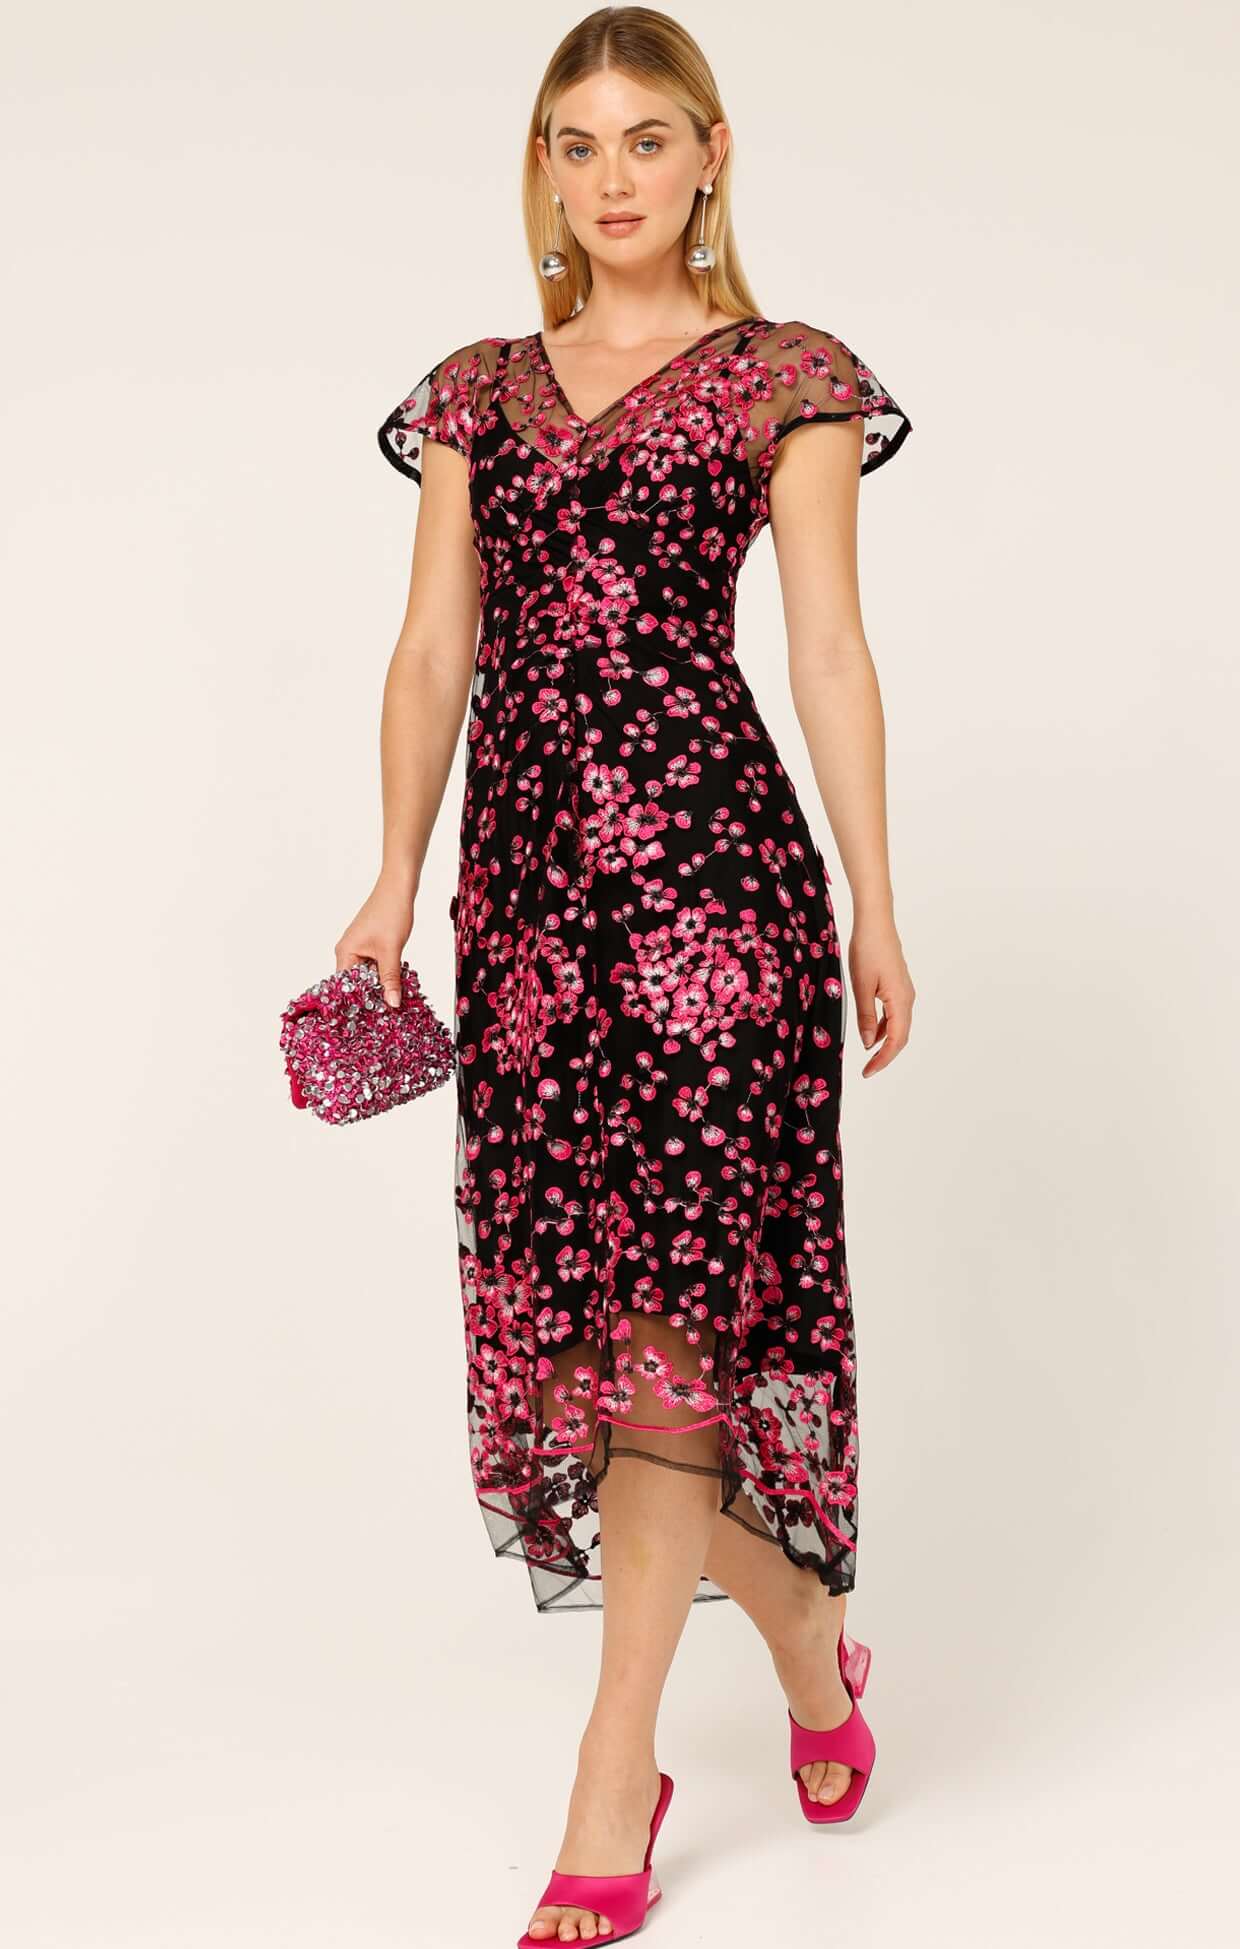 Sacha Drake - Joan Orchid Dress in Pink Black Floral